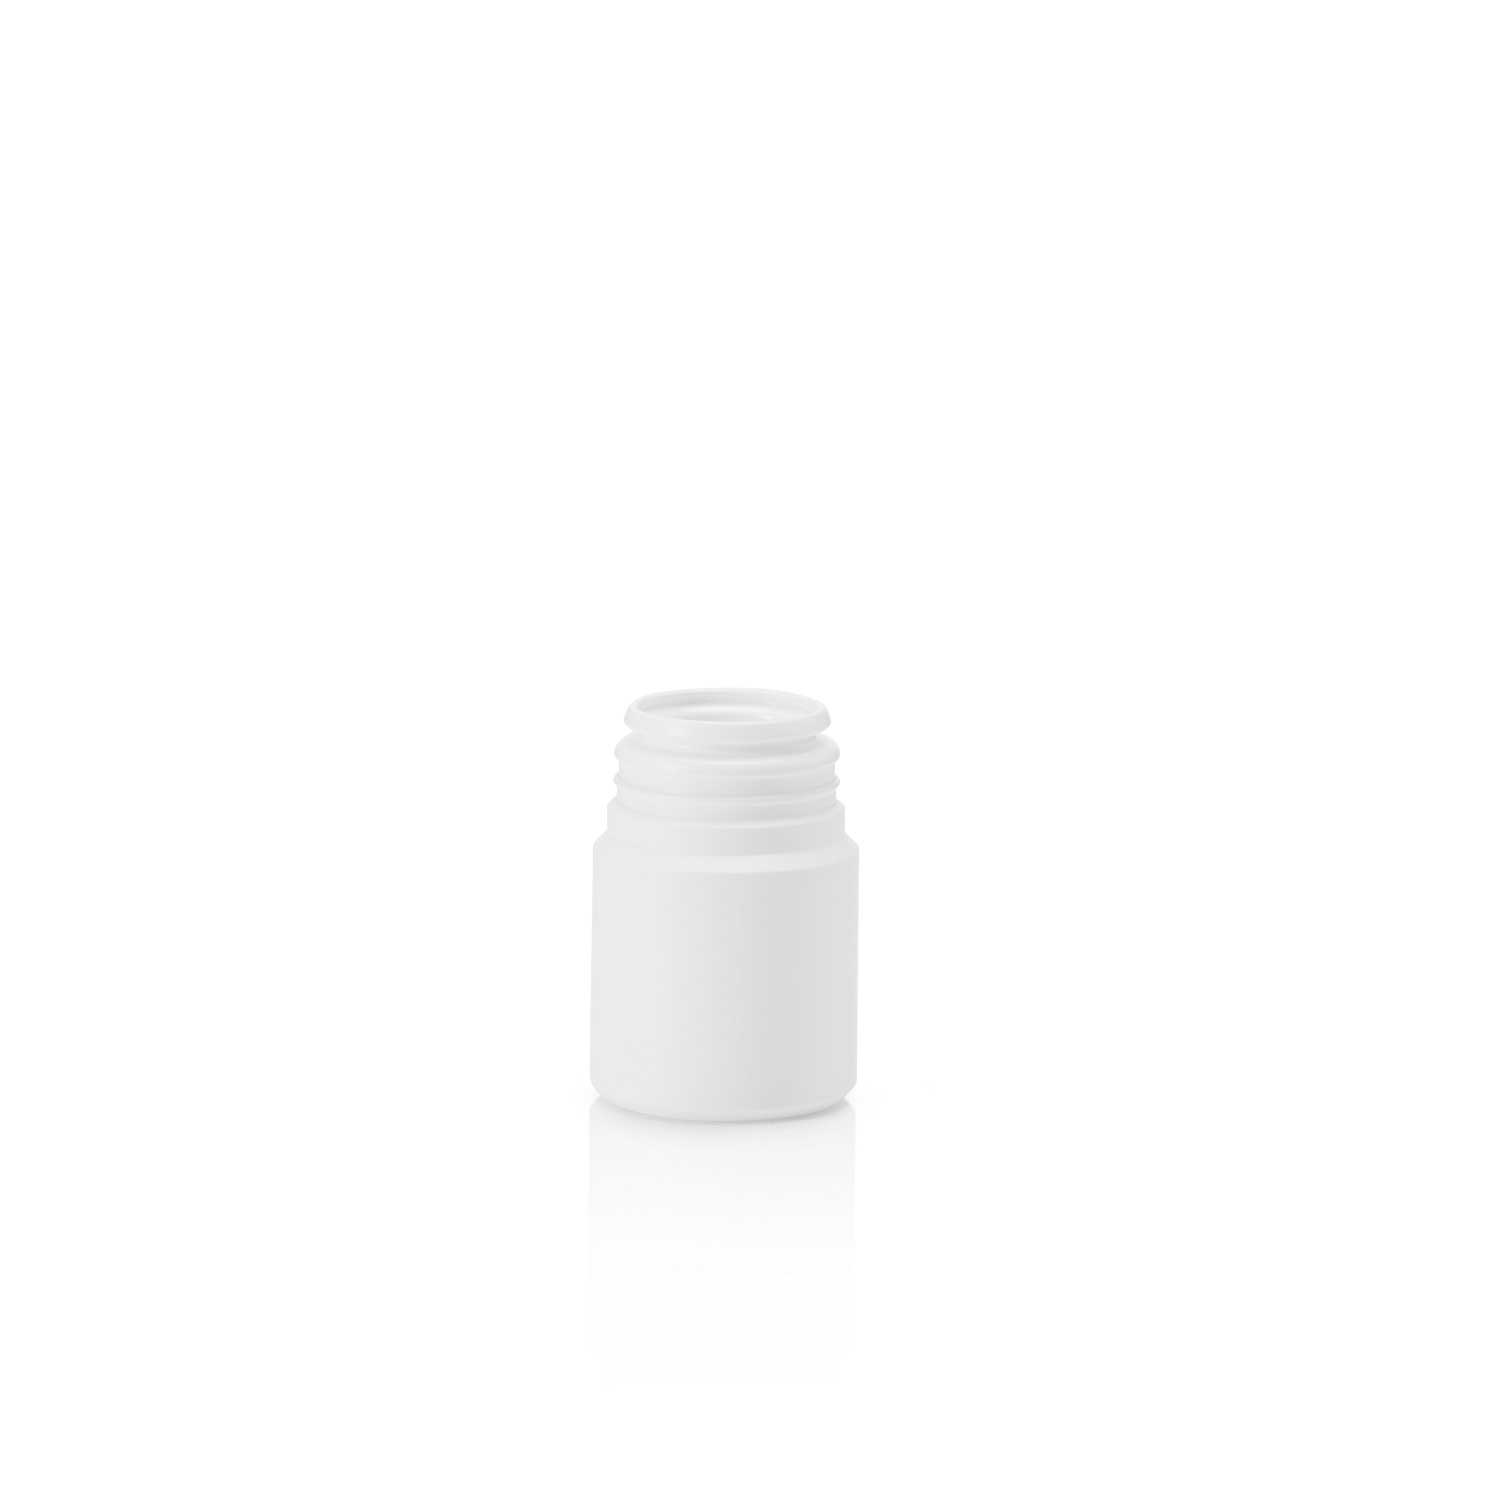 30ml White PP Tamper Evident Tampertainer Jar